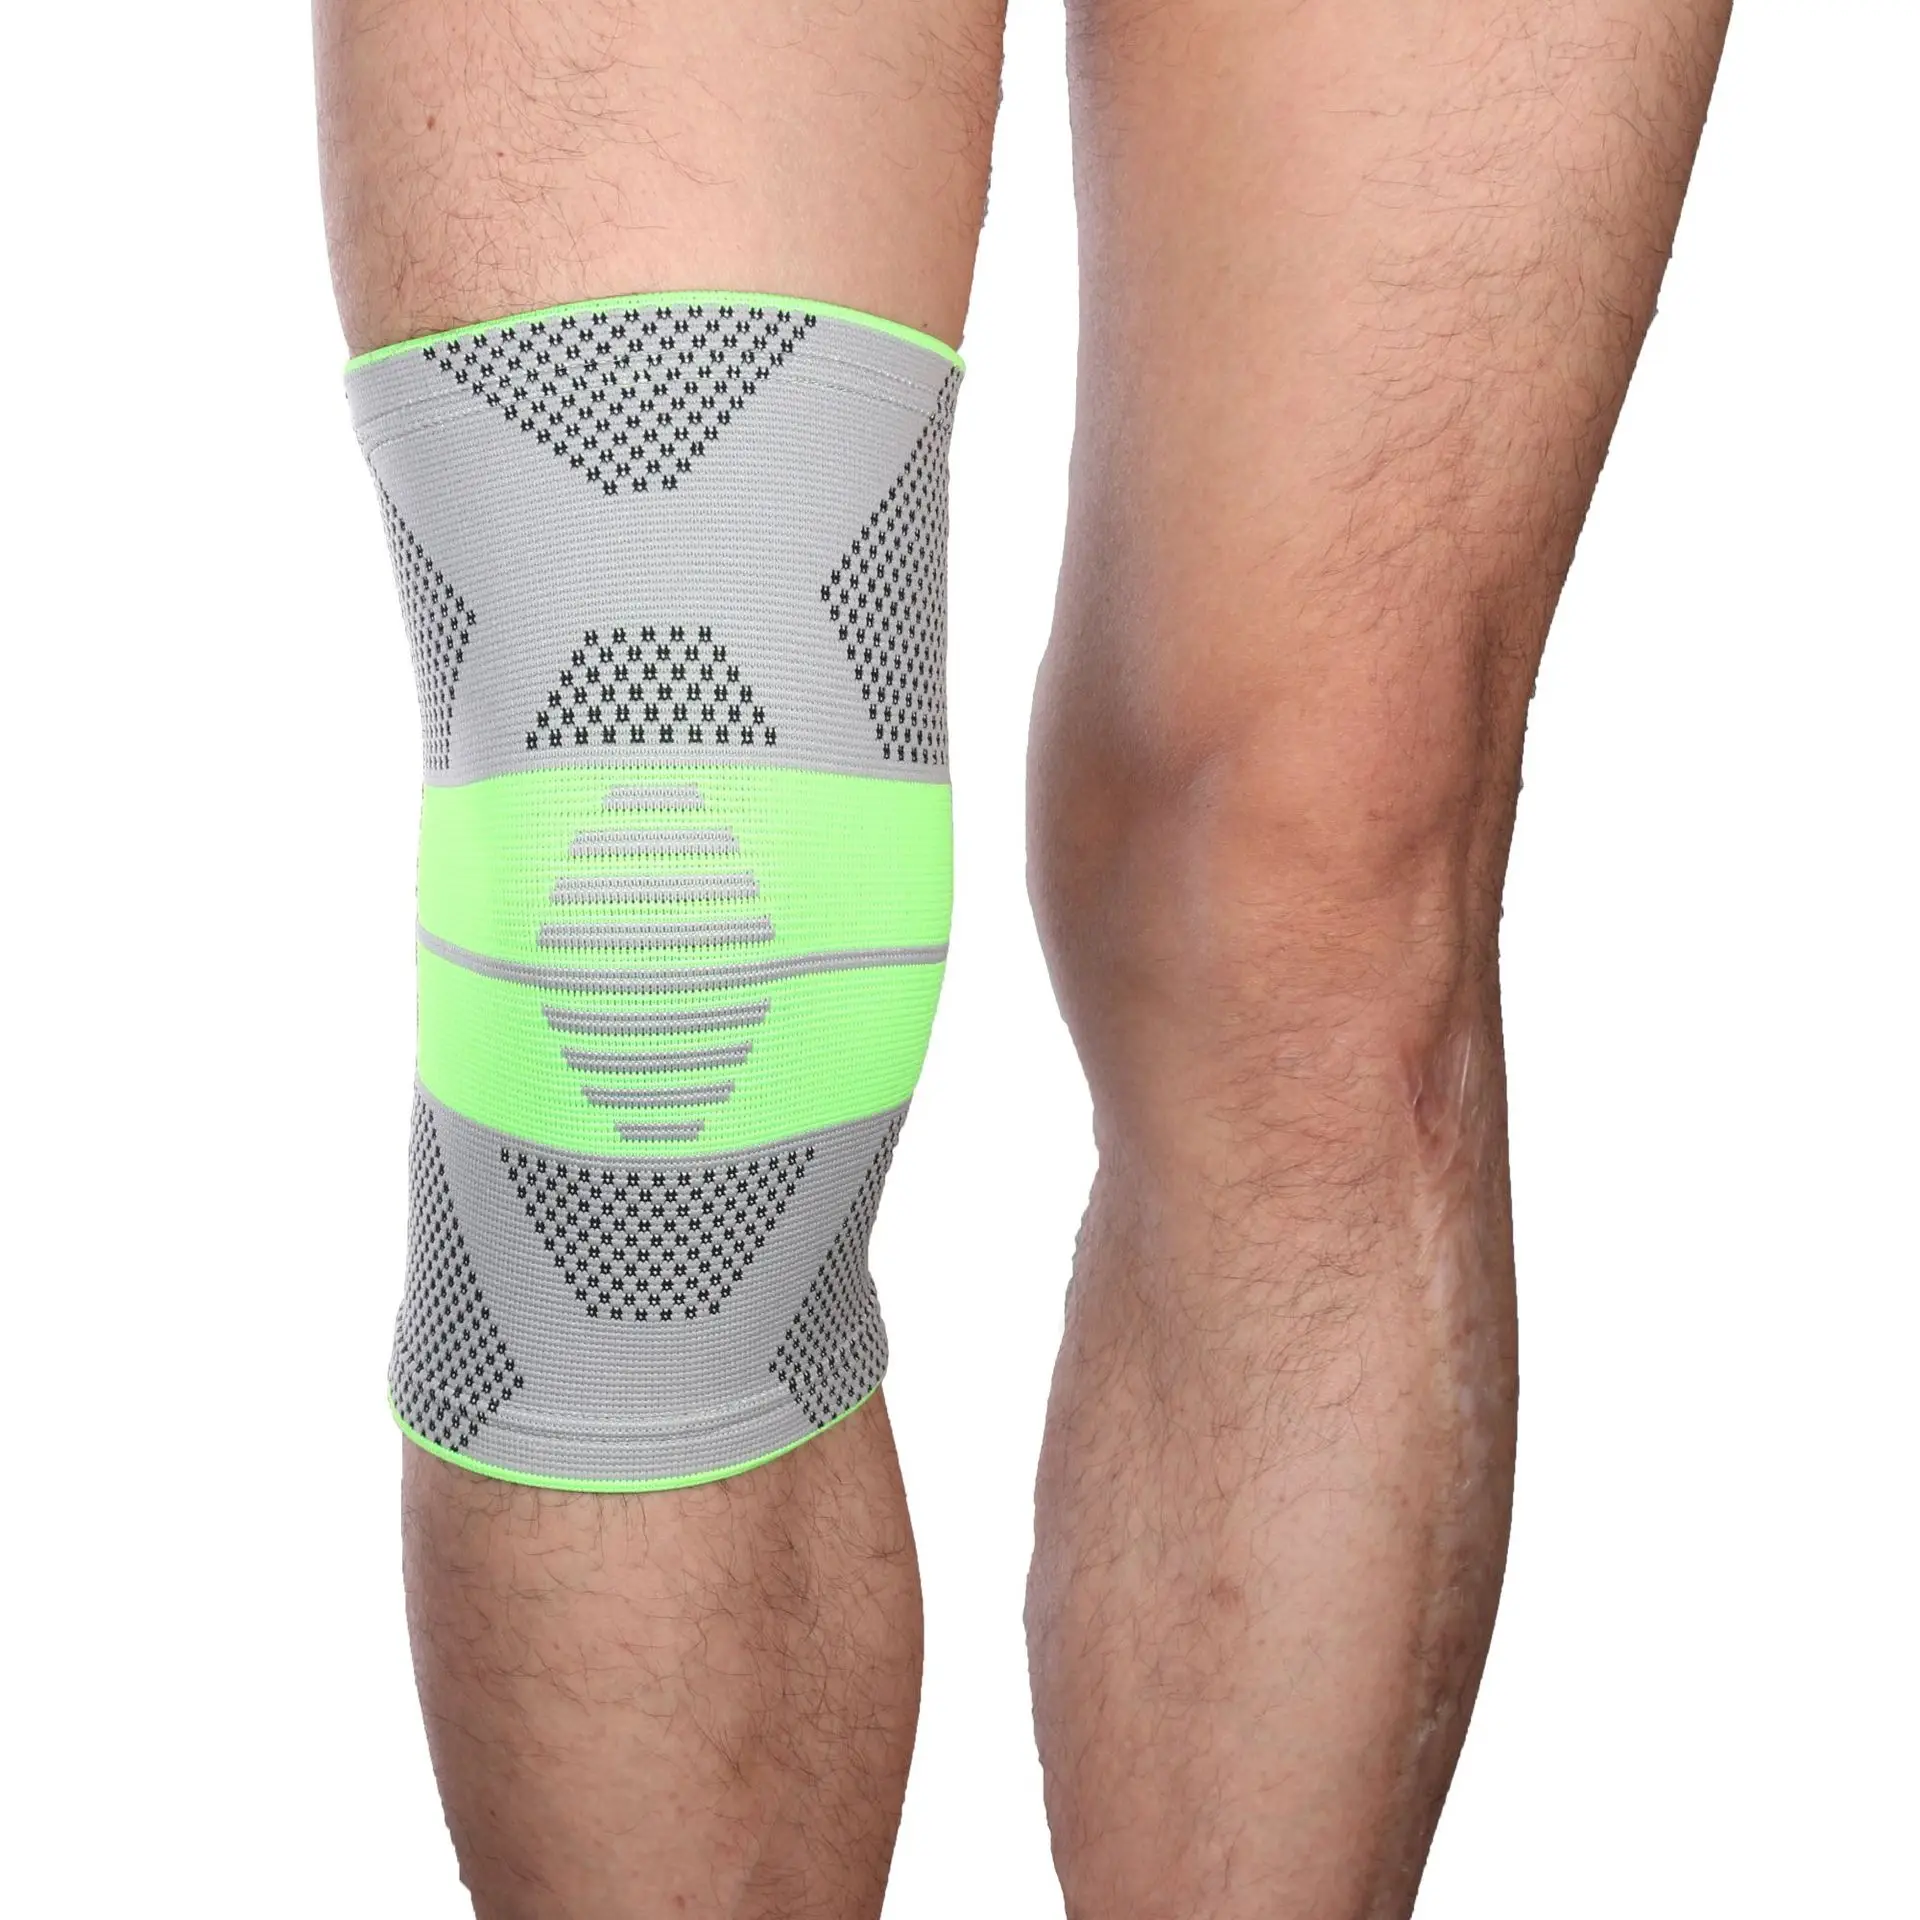 

Amazon hot sale High Elastic Compression Knee Sleeve Best Knee Brace for Men & Women Knee Support, Green